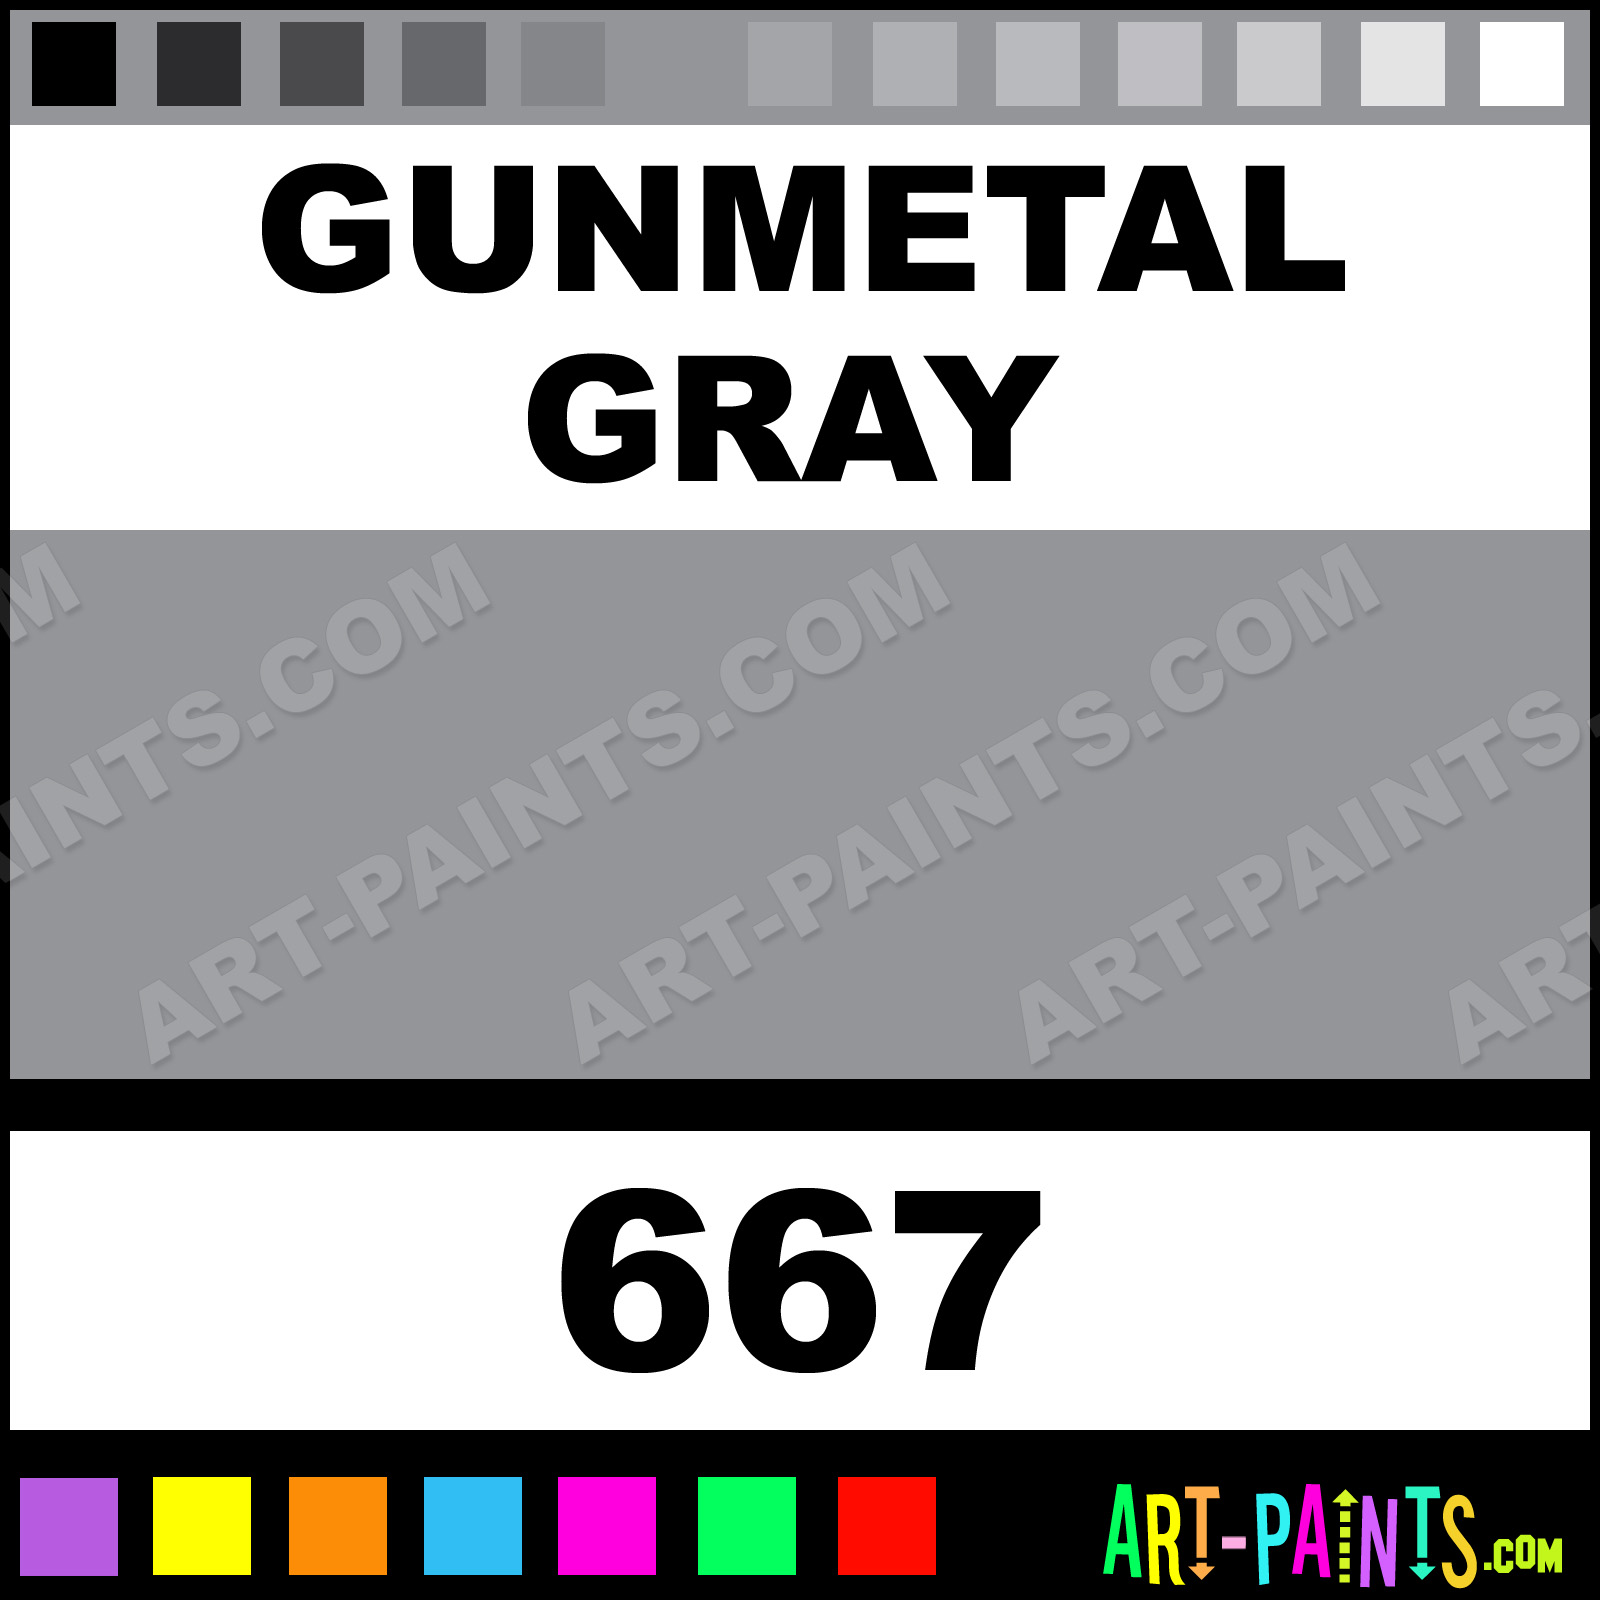 Gunmetal Gray Folk Art Acrylic Paints - 667 - Gunmetal Gray Paint